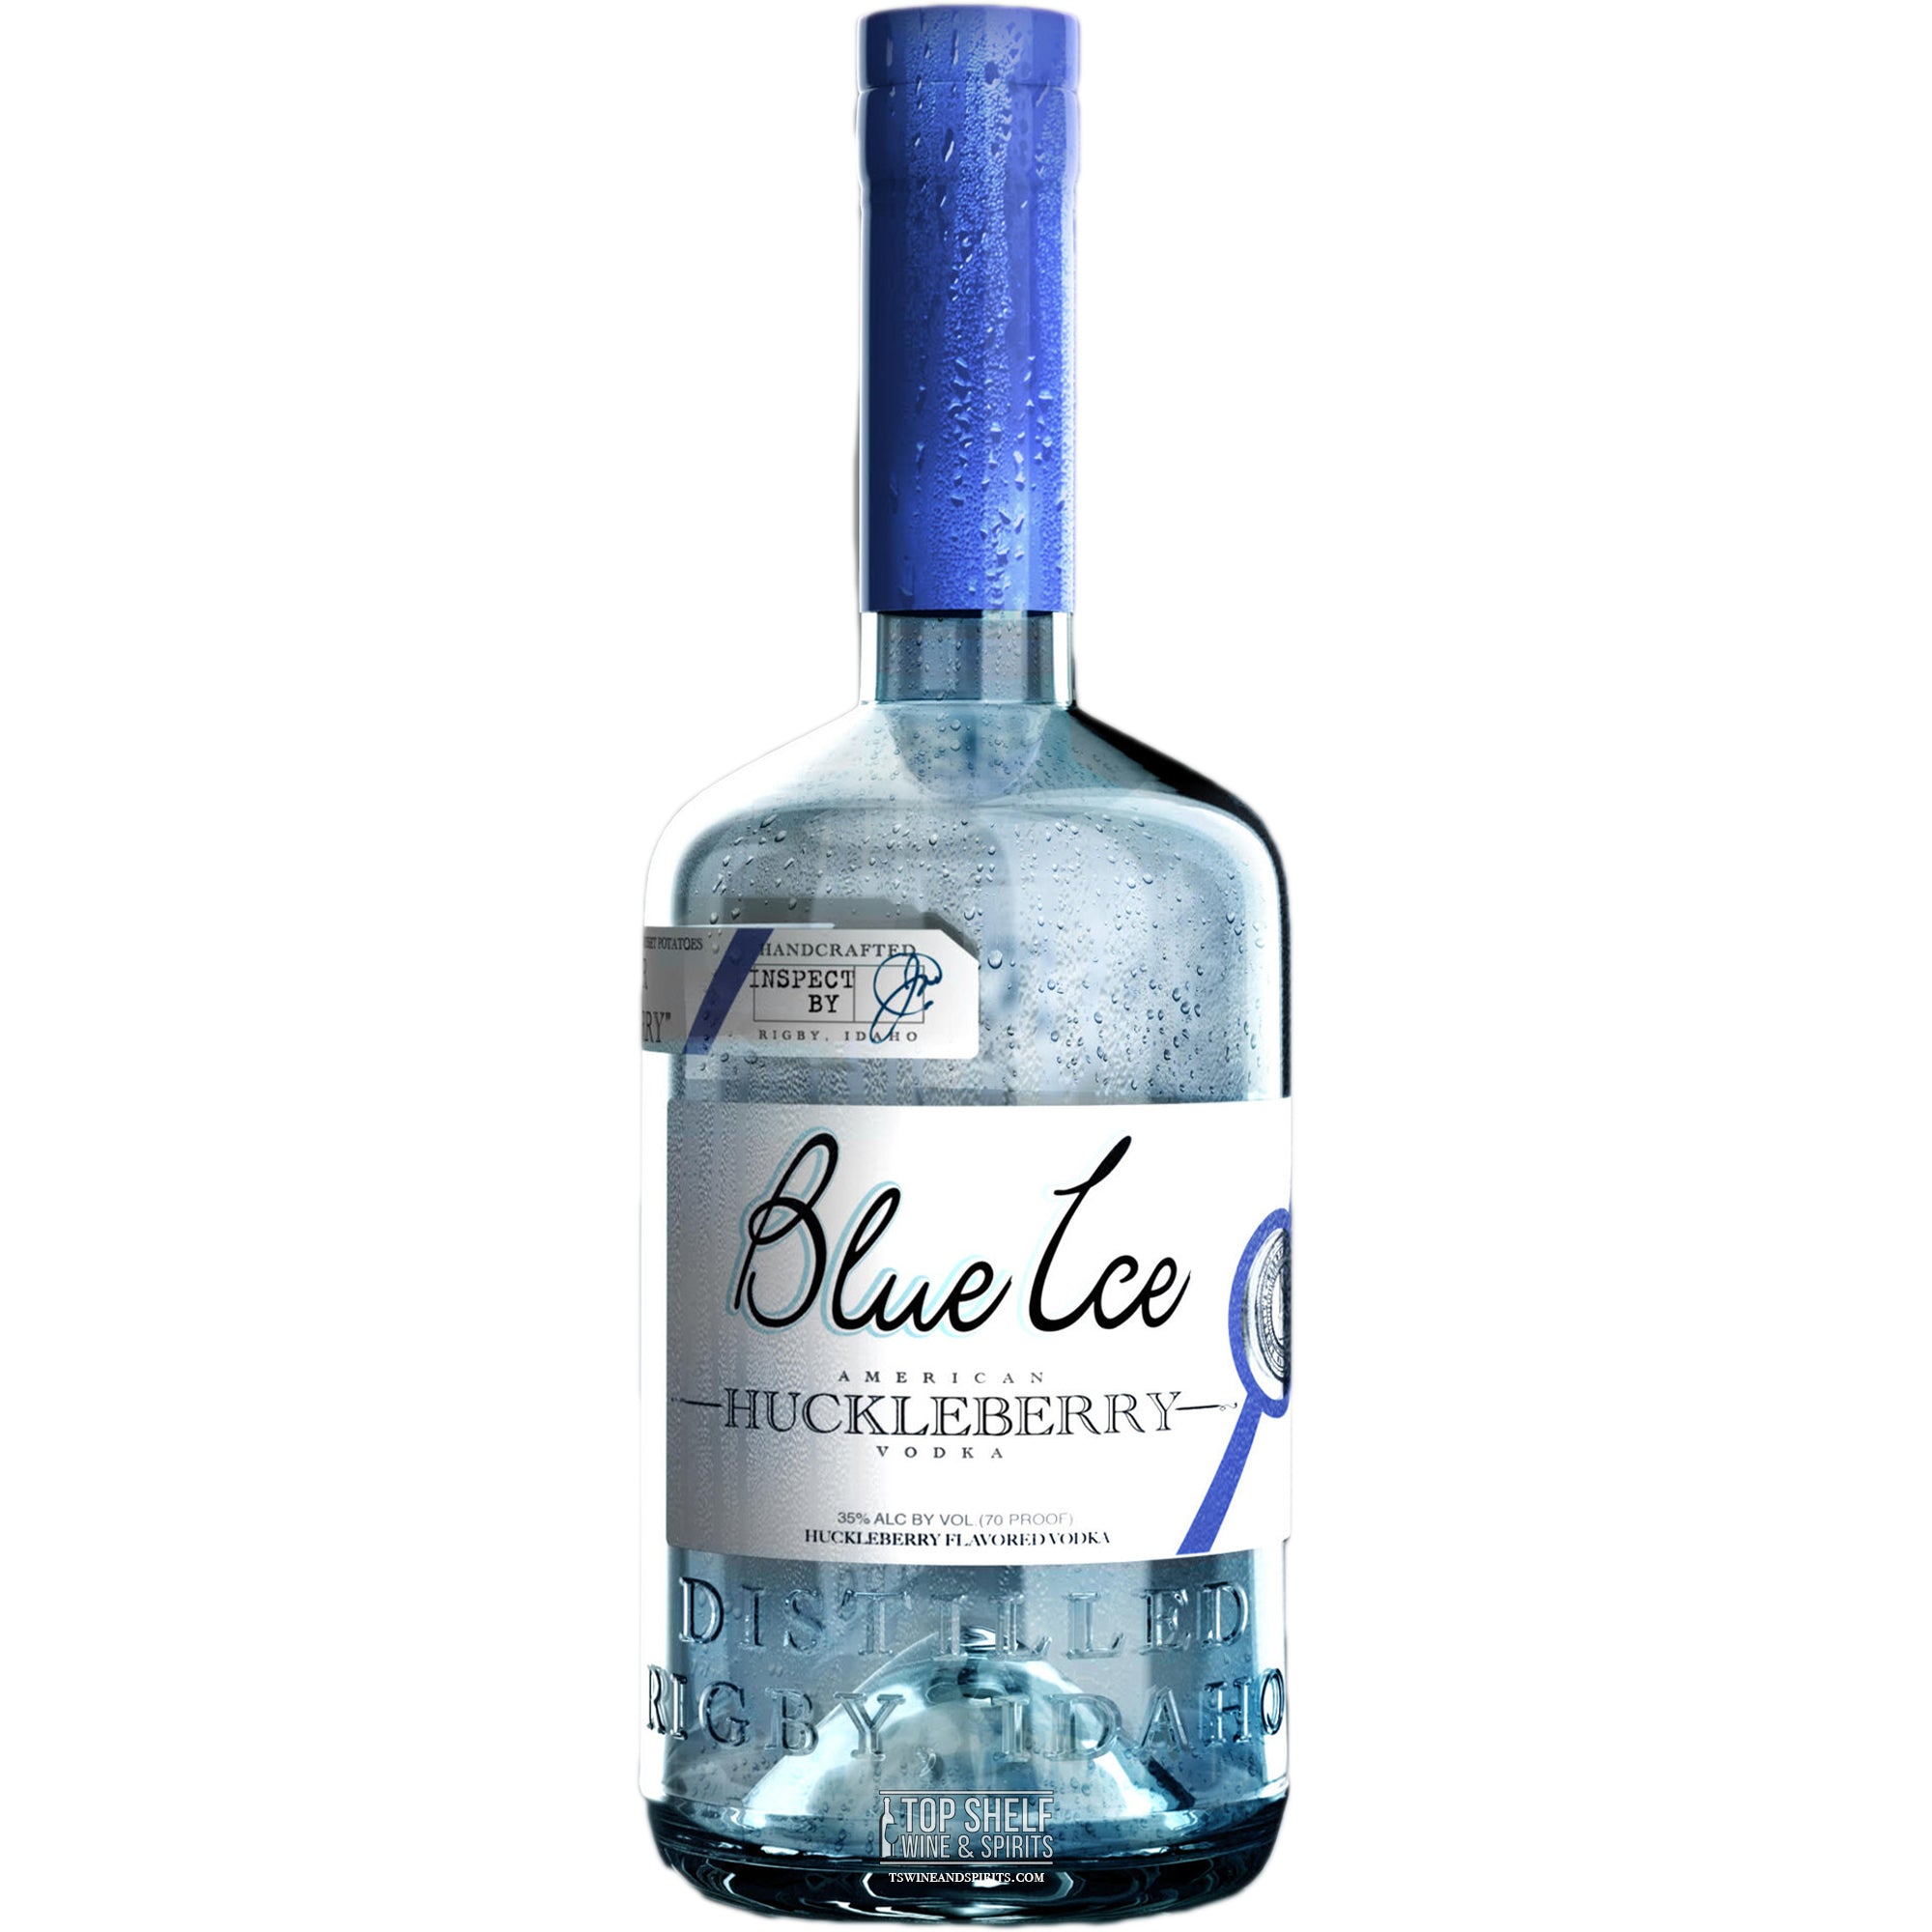 Blue Ice Huckleberry Potato Vodka